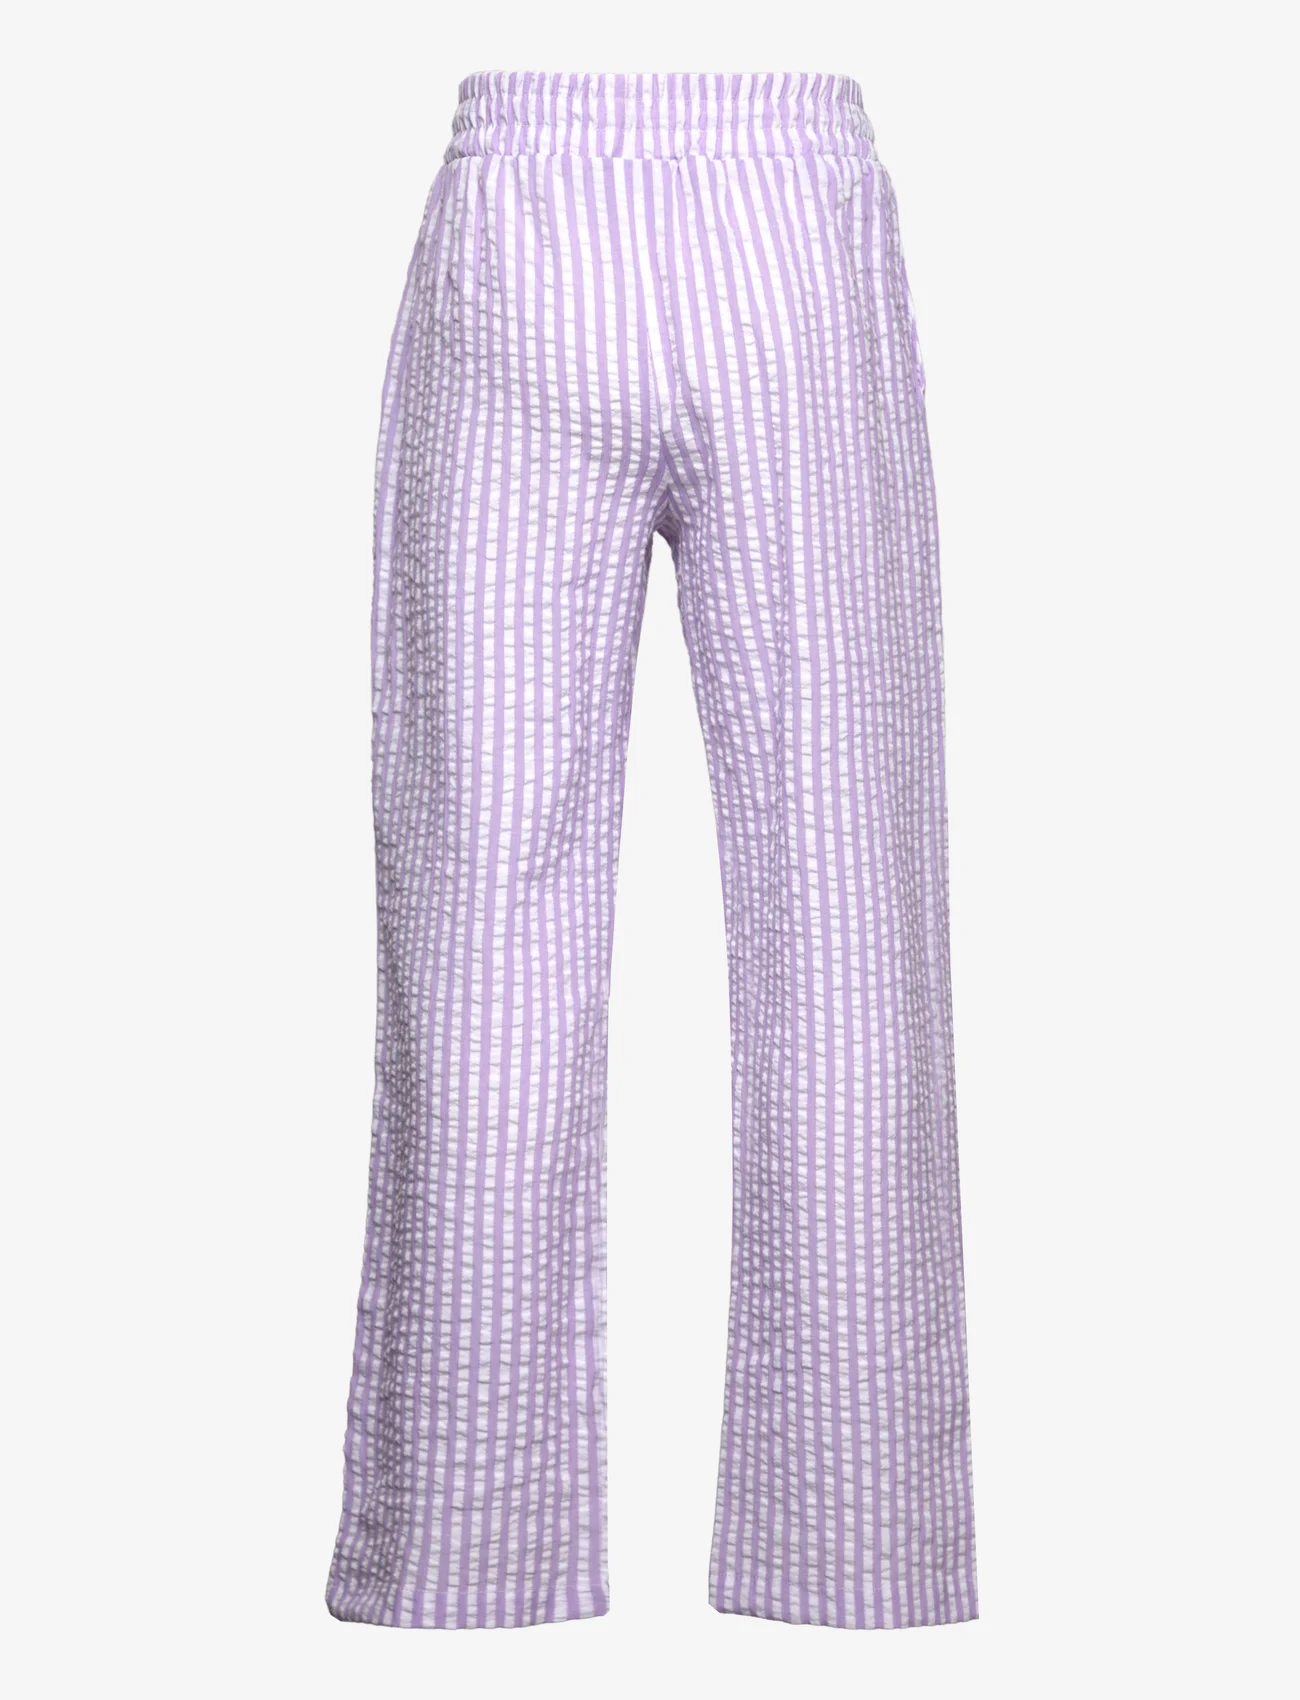 Grunt - Tenna Striped Pant - lägsta priserna - purple - 1